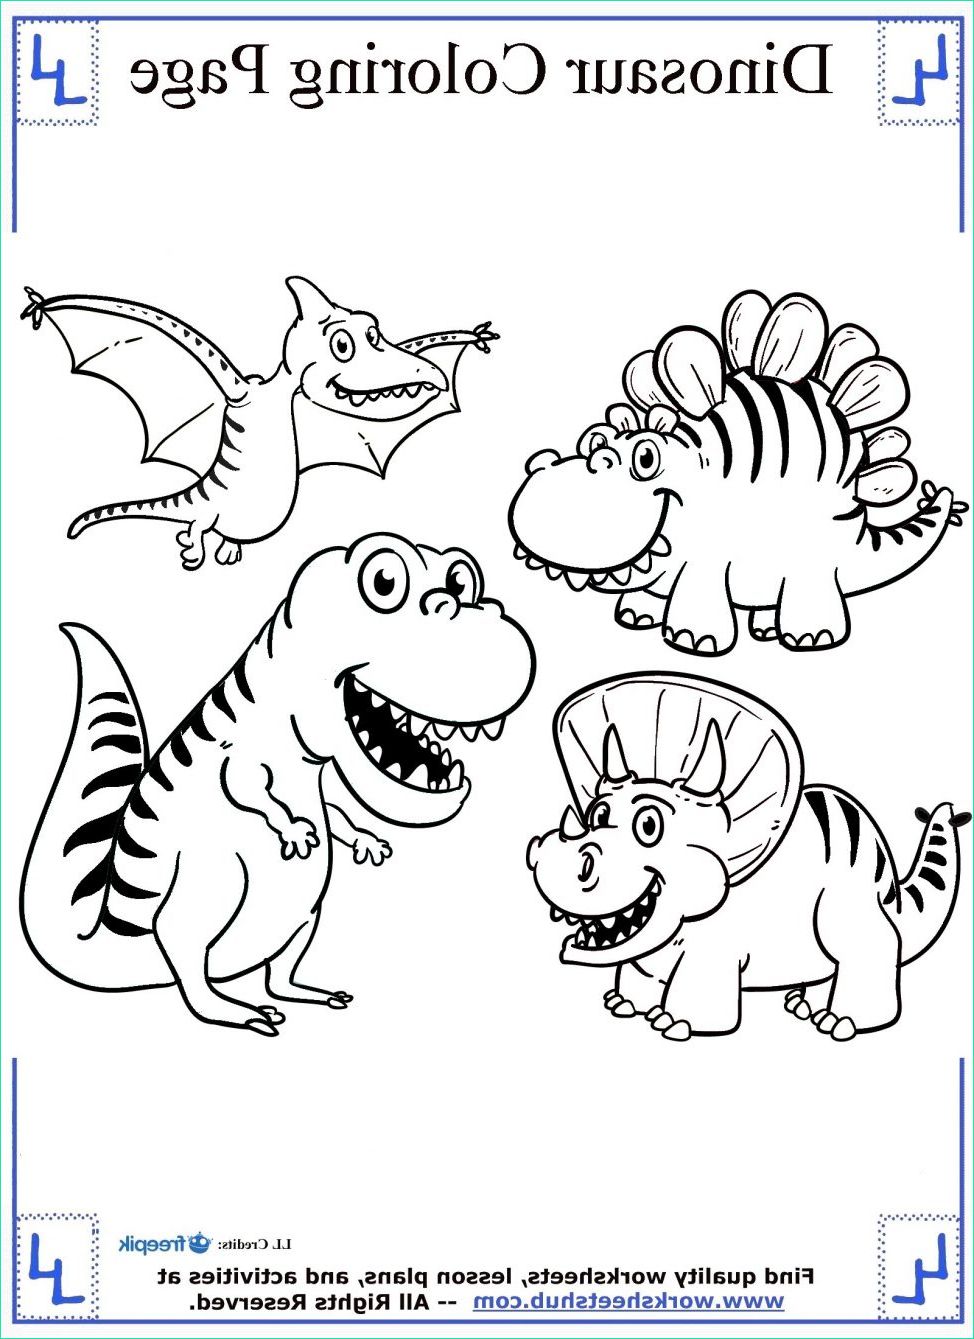 giganotosaurus coloring page